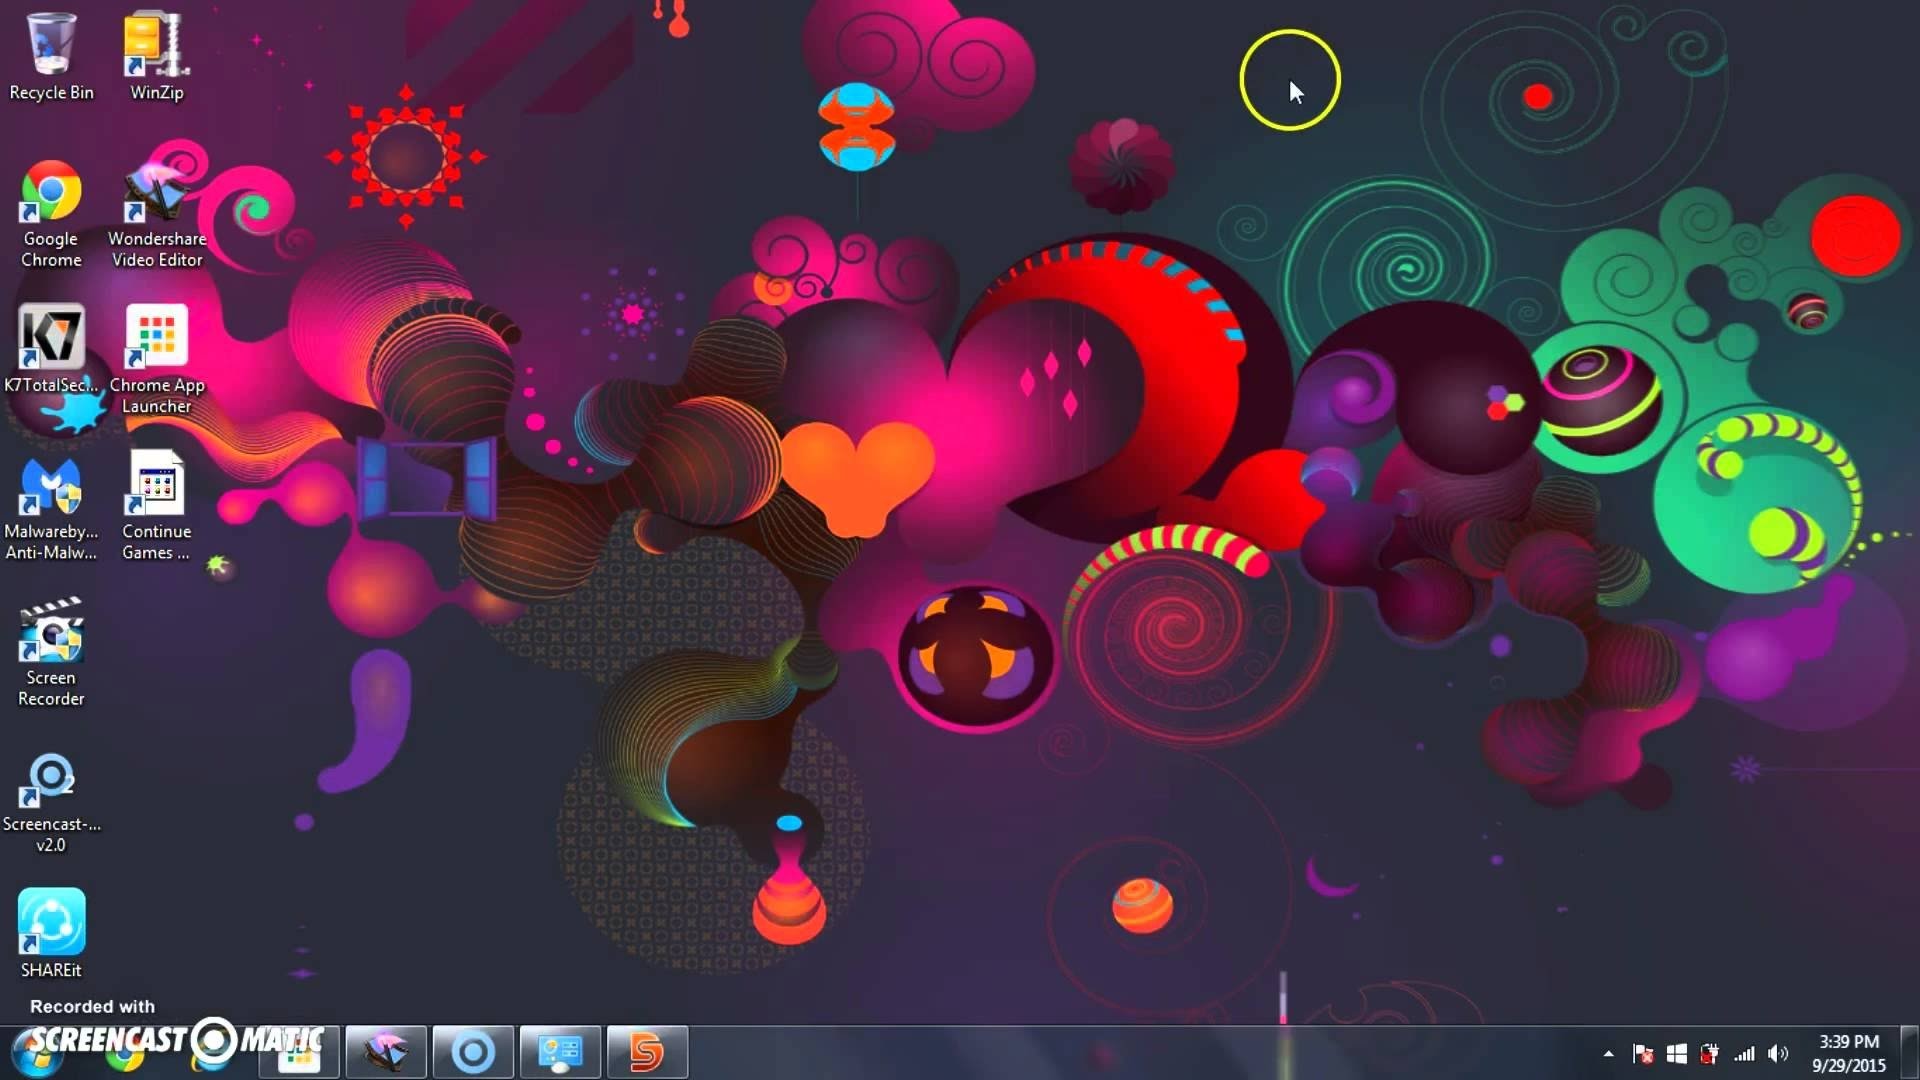 windows 8.1 wallpaper themes,violet,purple,screenshot,graphic design,colorfulness